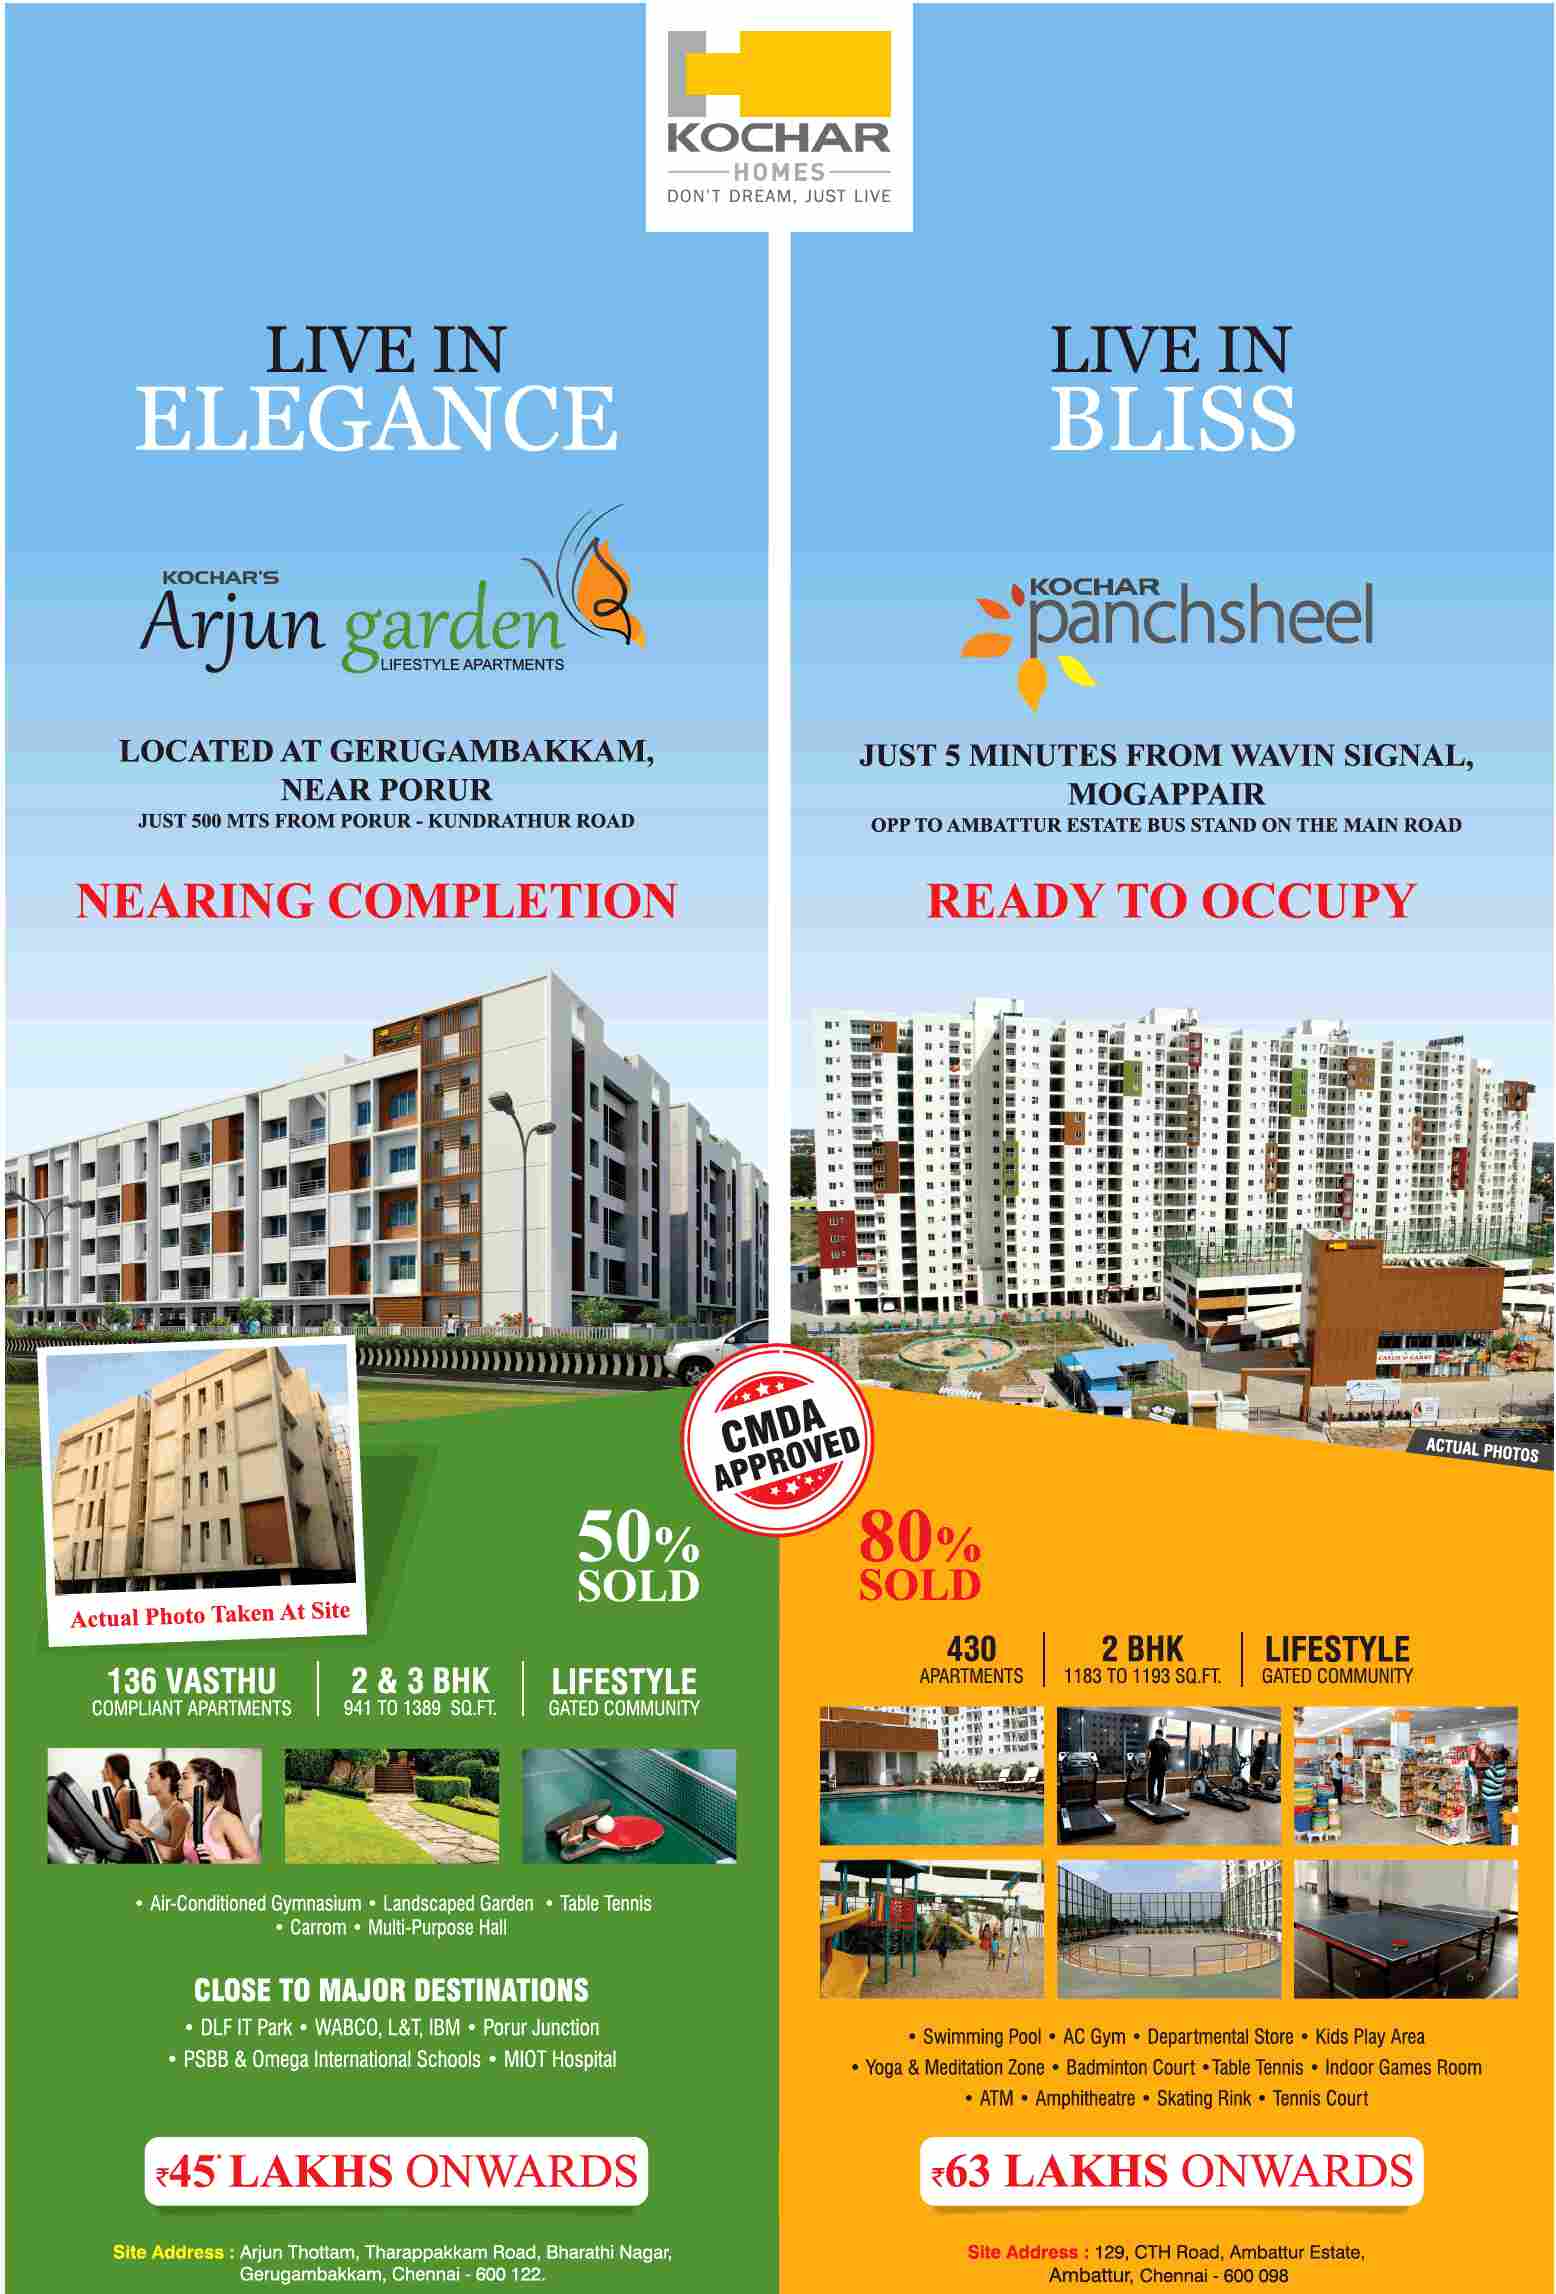 Invest at Kochar Homes in Chennai